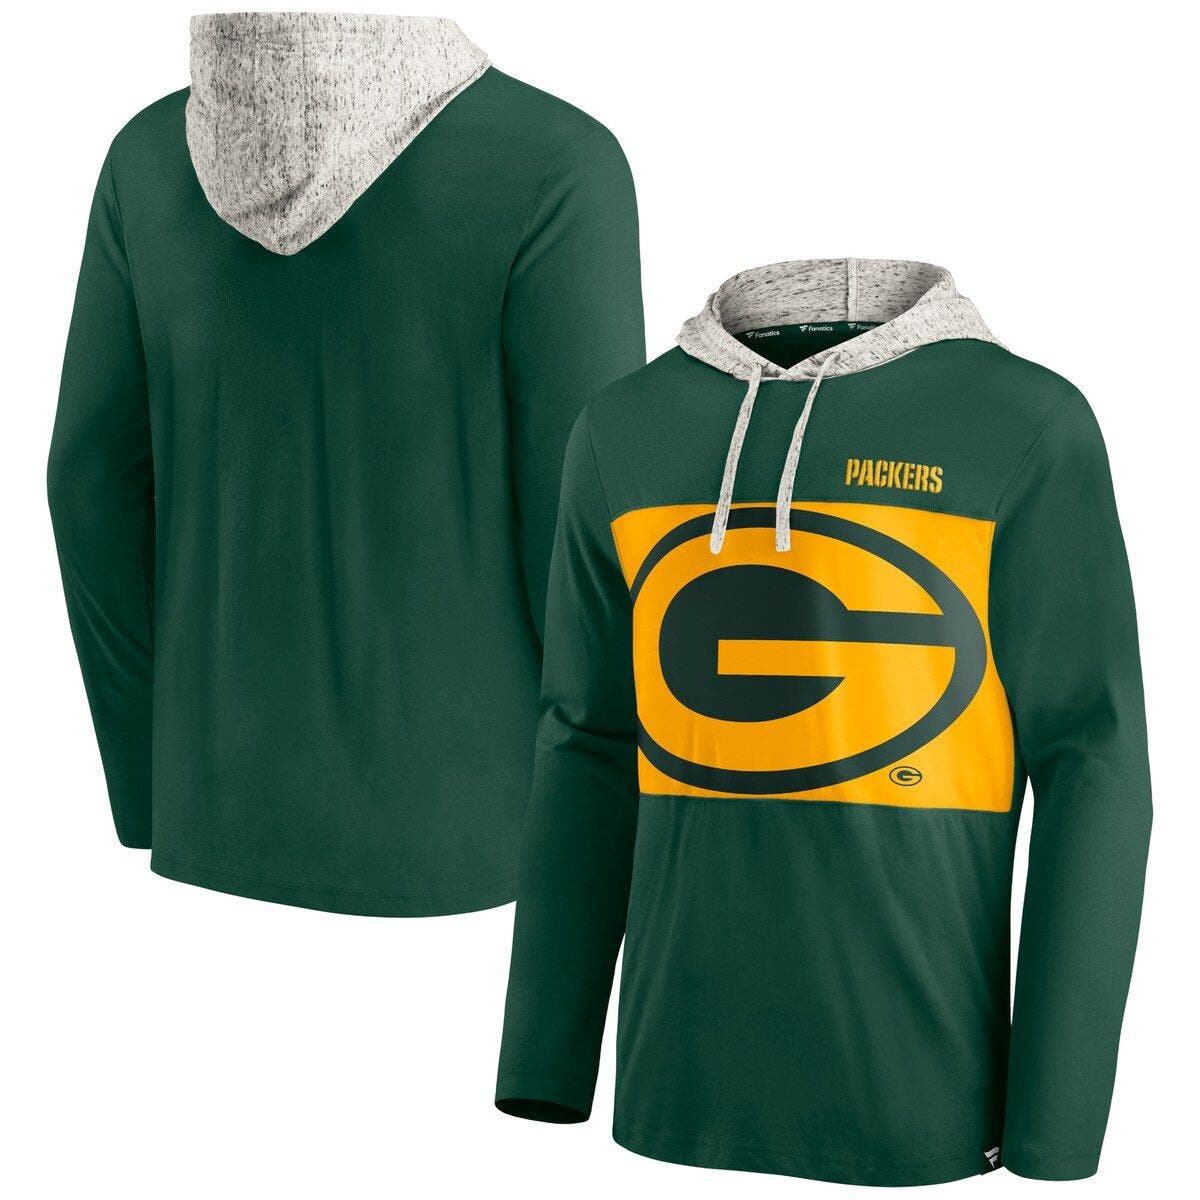 Green Bay Packers Hoodies Pullover Men Sweatshirt Hooded Fans Casual Jacket Coat 